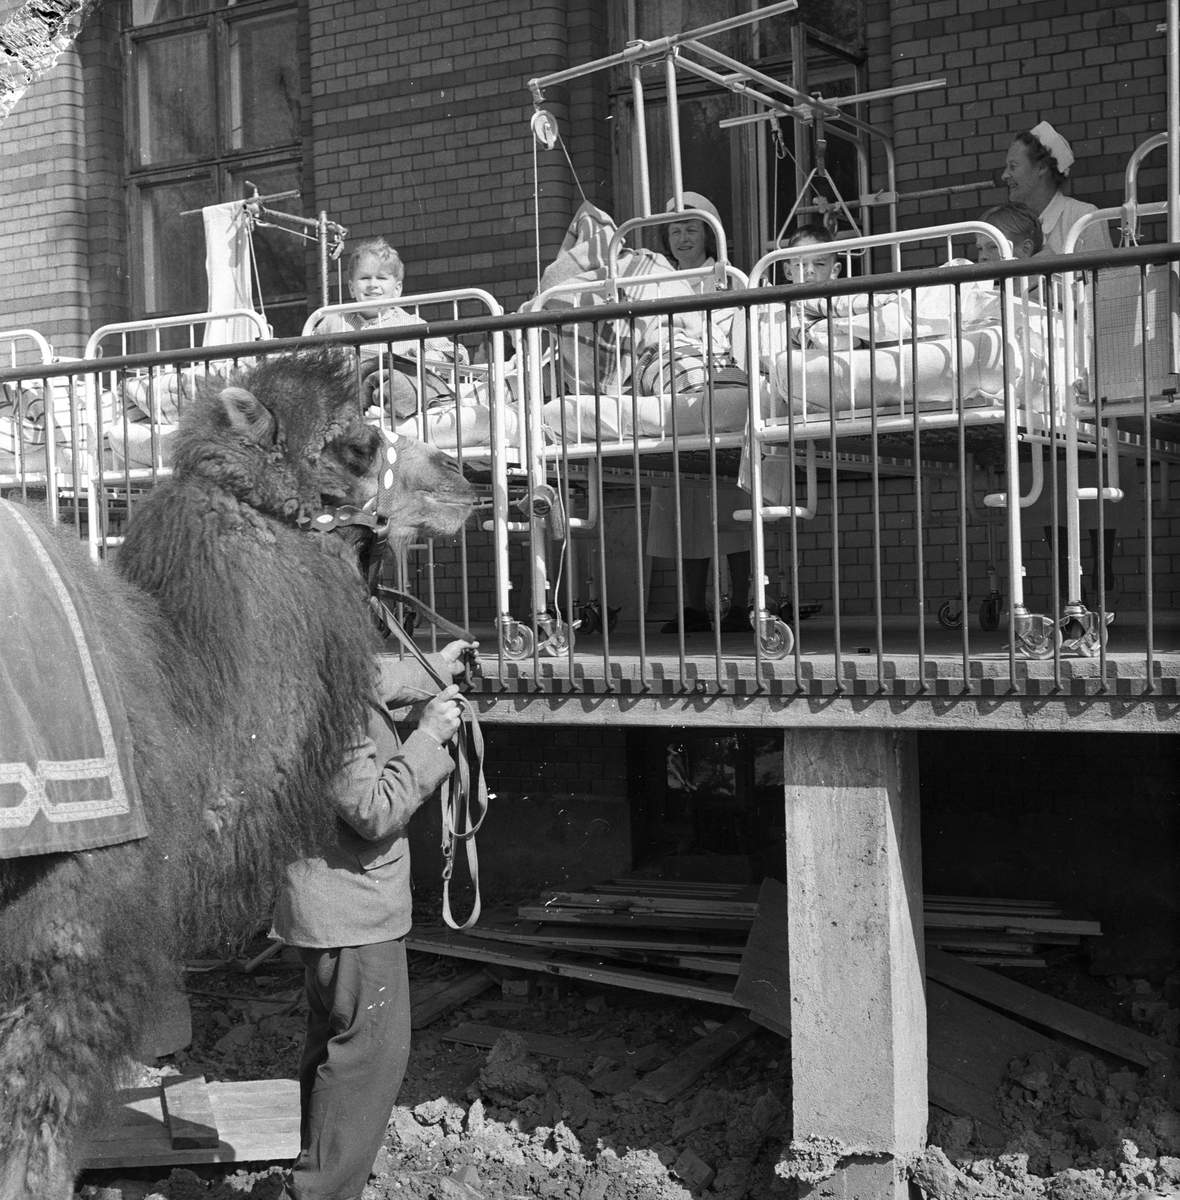 Kamel fra Cirkus Berny.
Fotografert 1957